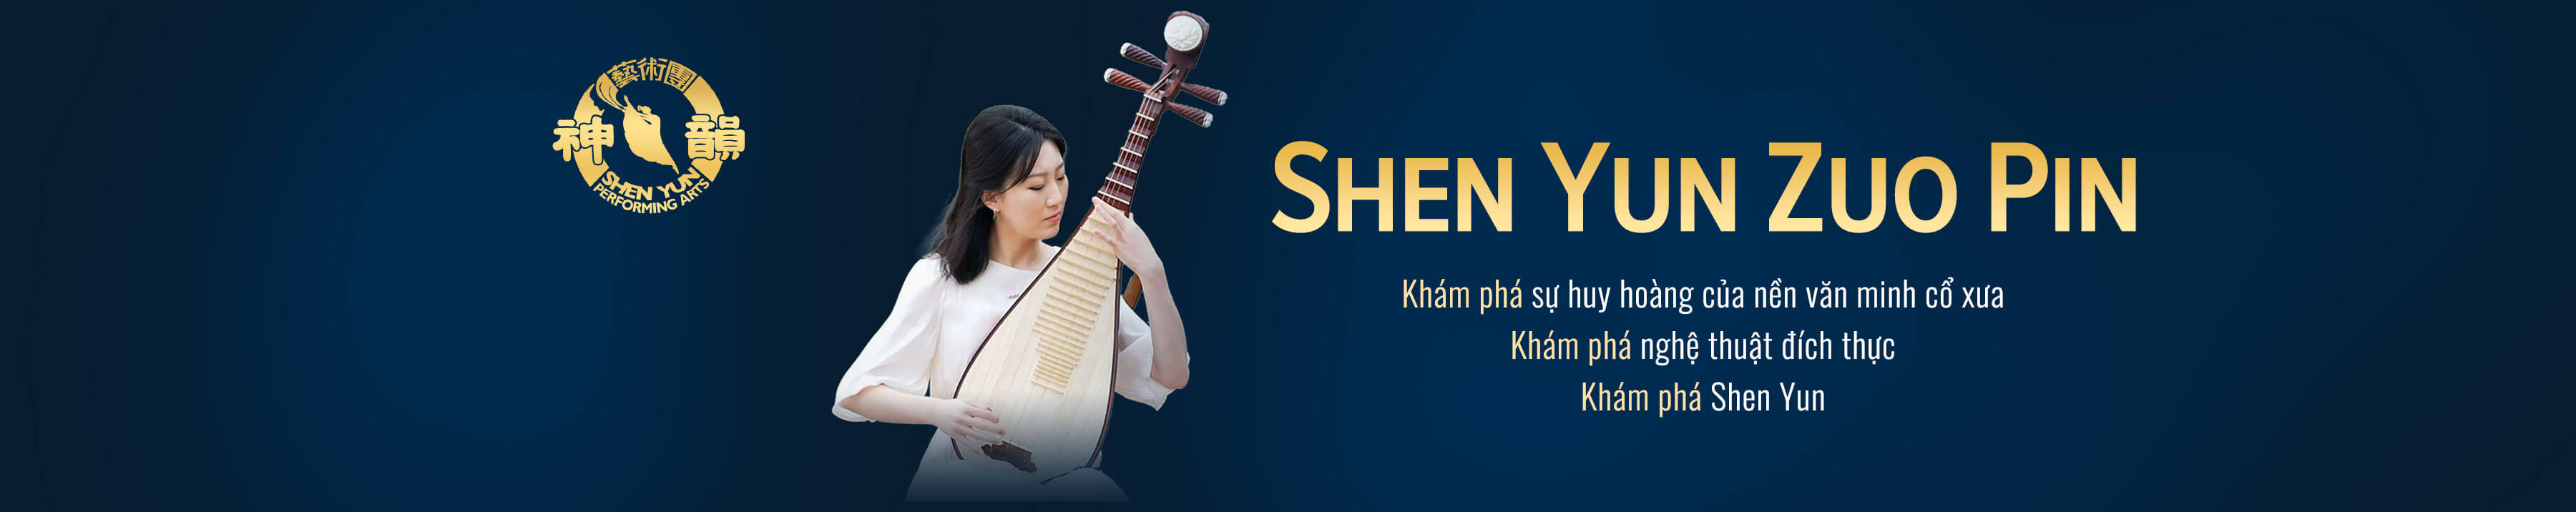 Shen Yun Zuo Pin  | Epoch Times Tiếng Việt